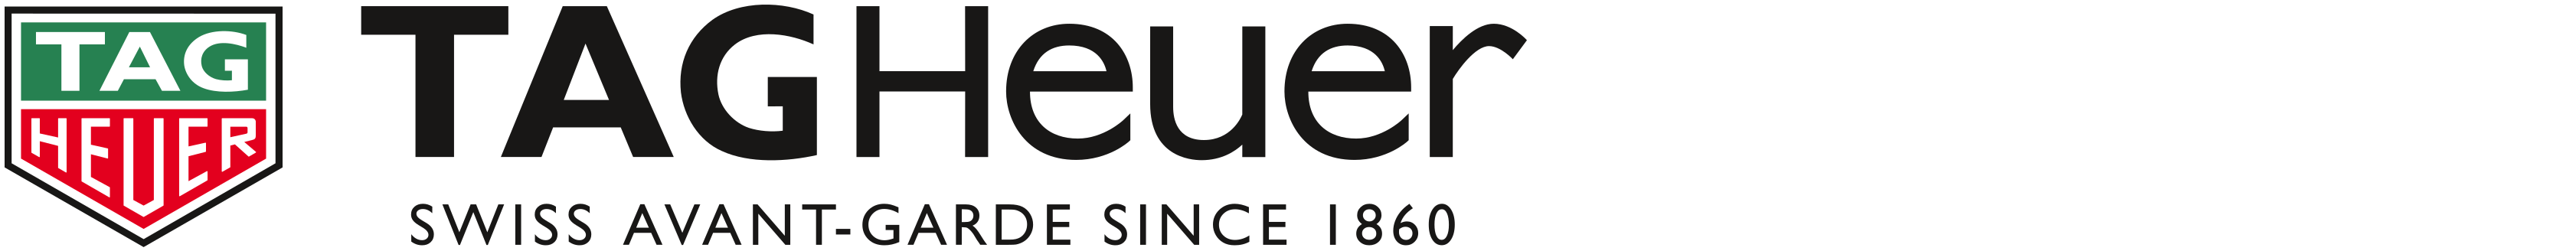 Logo Tag Heuer SA, La Chaux-de-Fonds